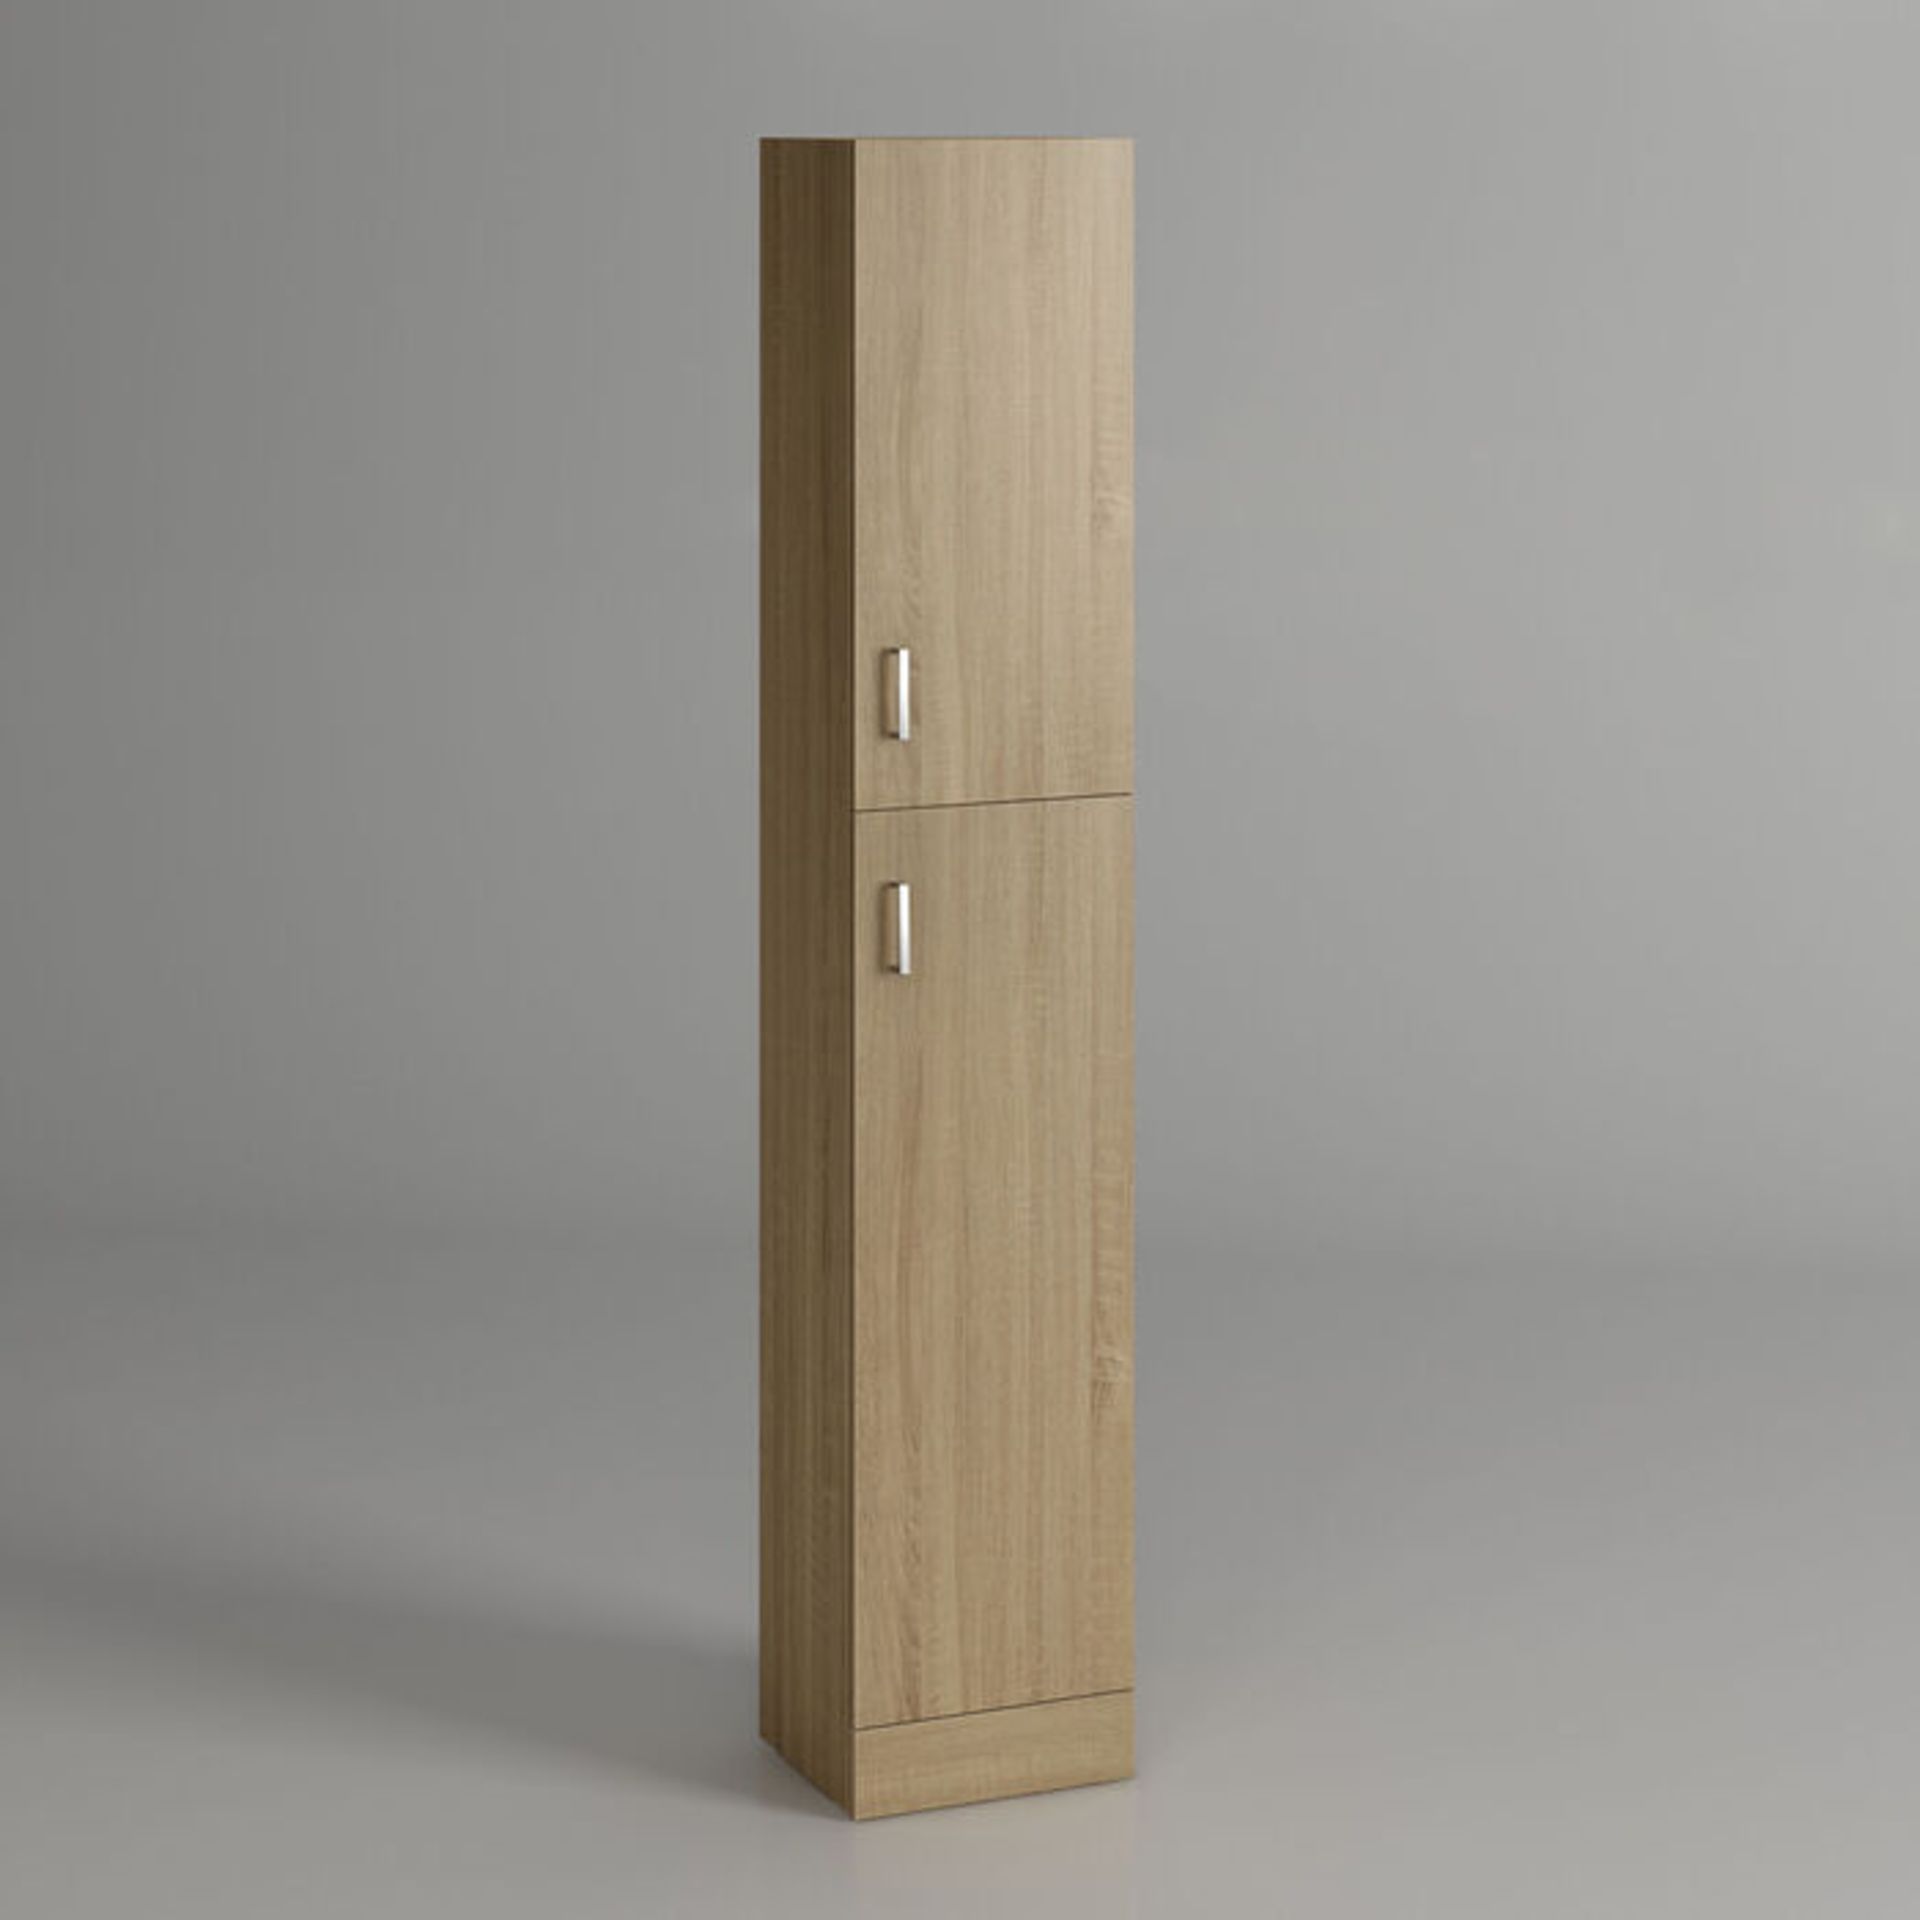 (QP157) 1900x300mm Oak Effect Tall Storage Cabinet - Floor Standing. Left Hand RRP £299. - Image 2 of 3